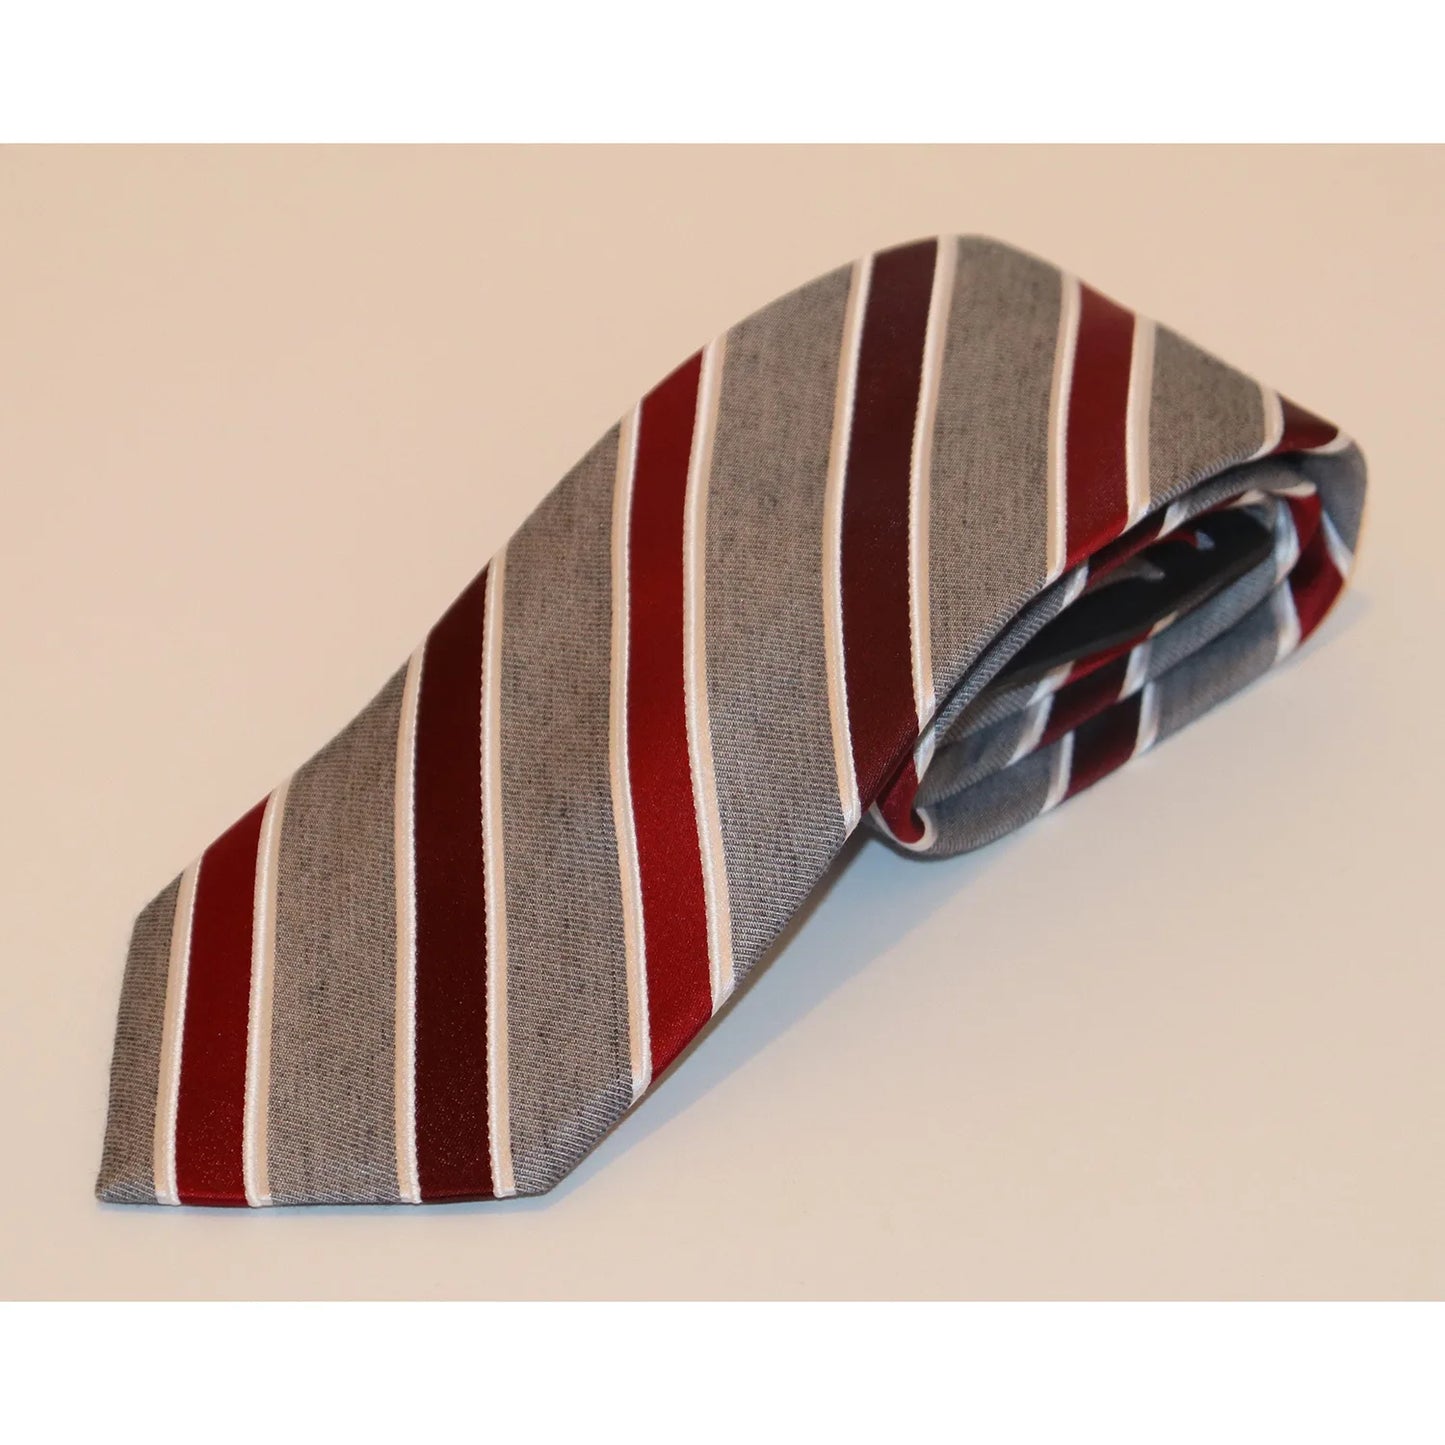 The Shirt Shop Tie - Grey with Crimson/Scarlet Stripes